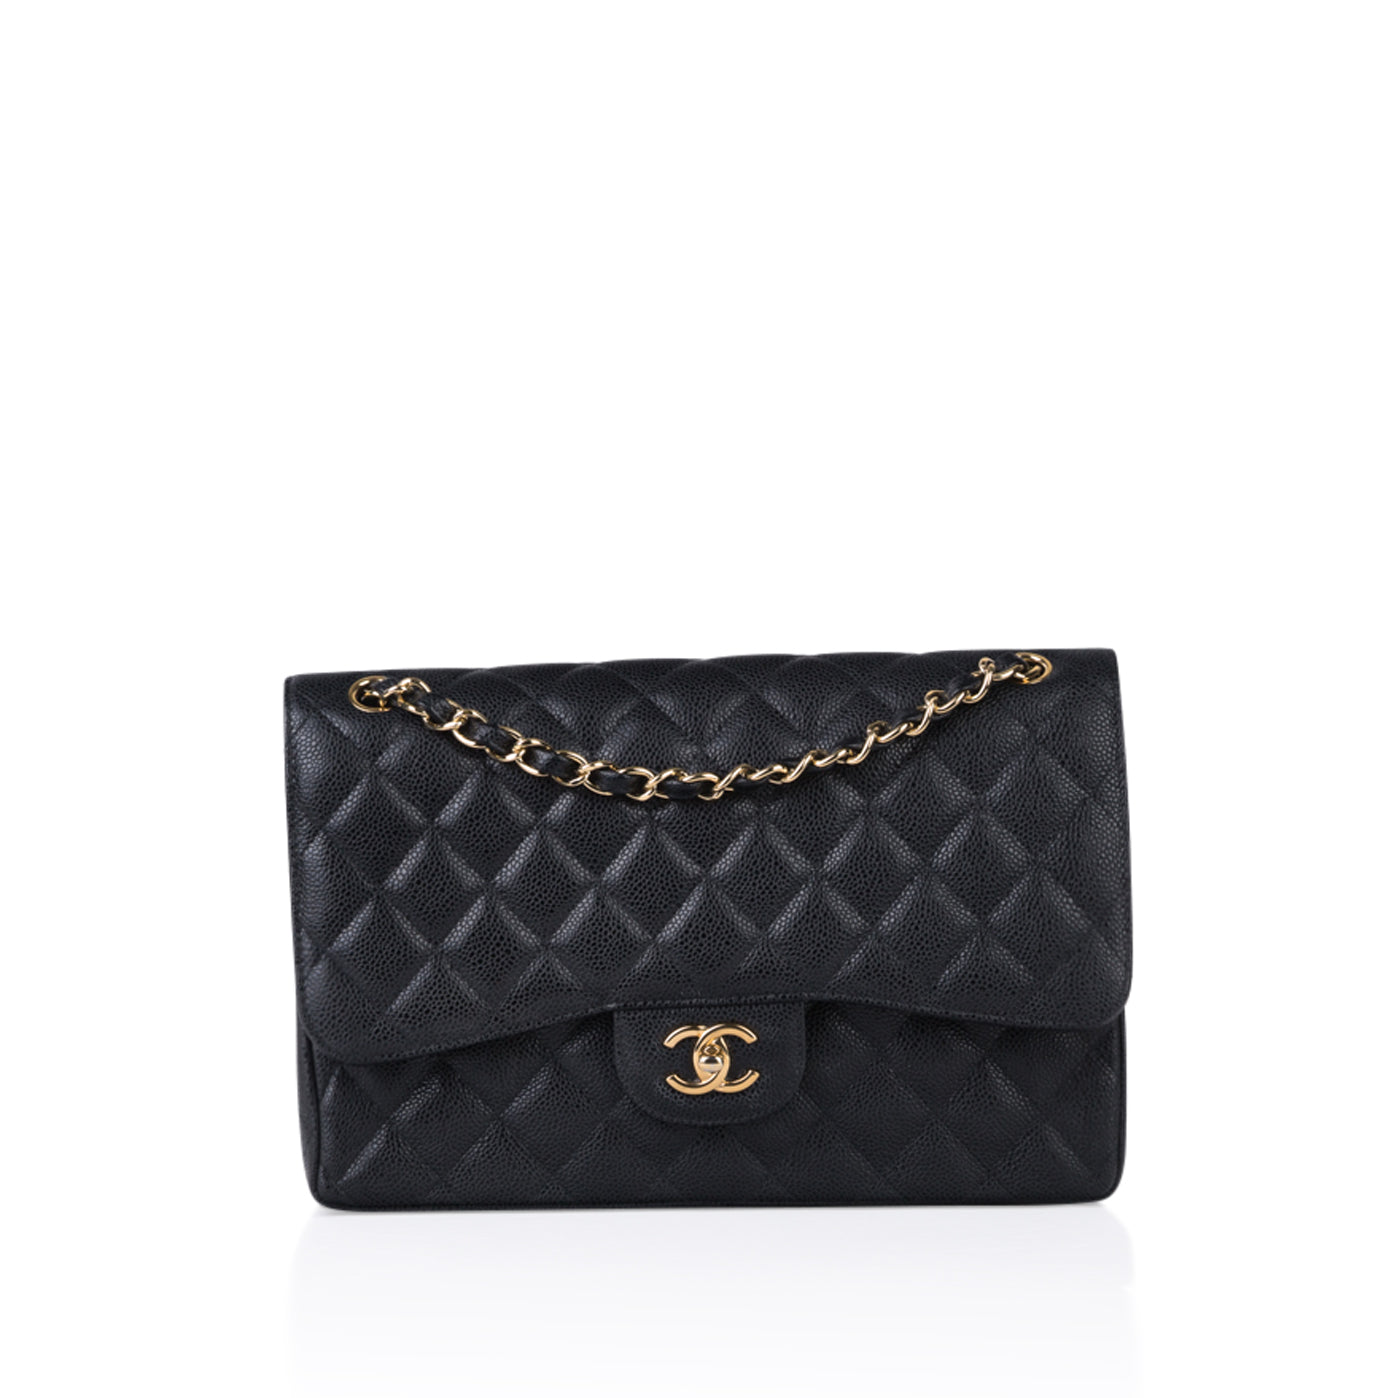 Chanel - Classic Flap Bag - Jumbo - Black Caviar Leather - GHW